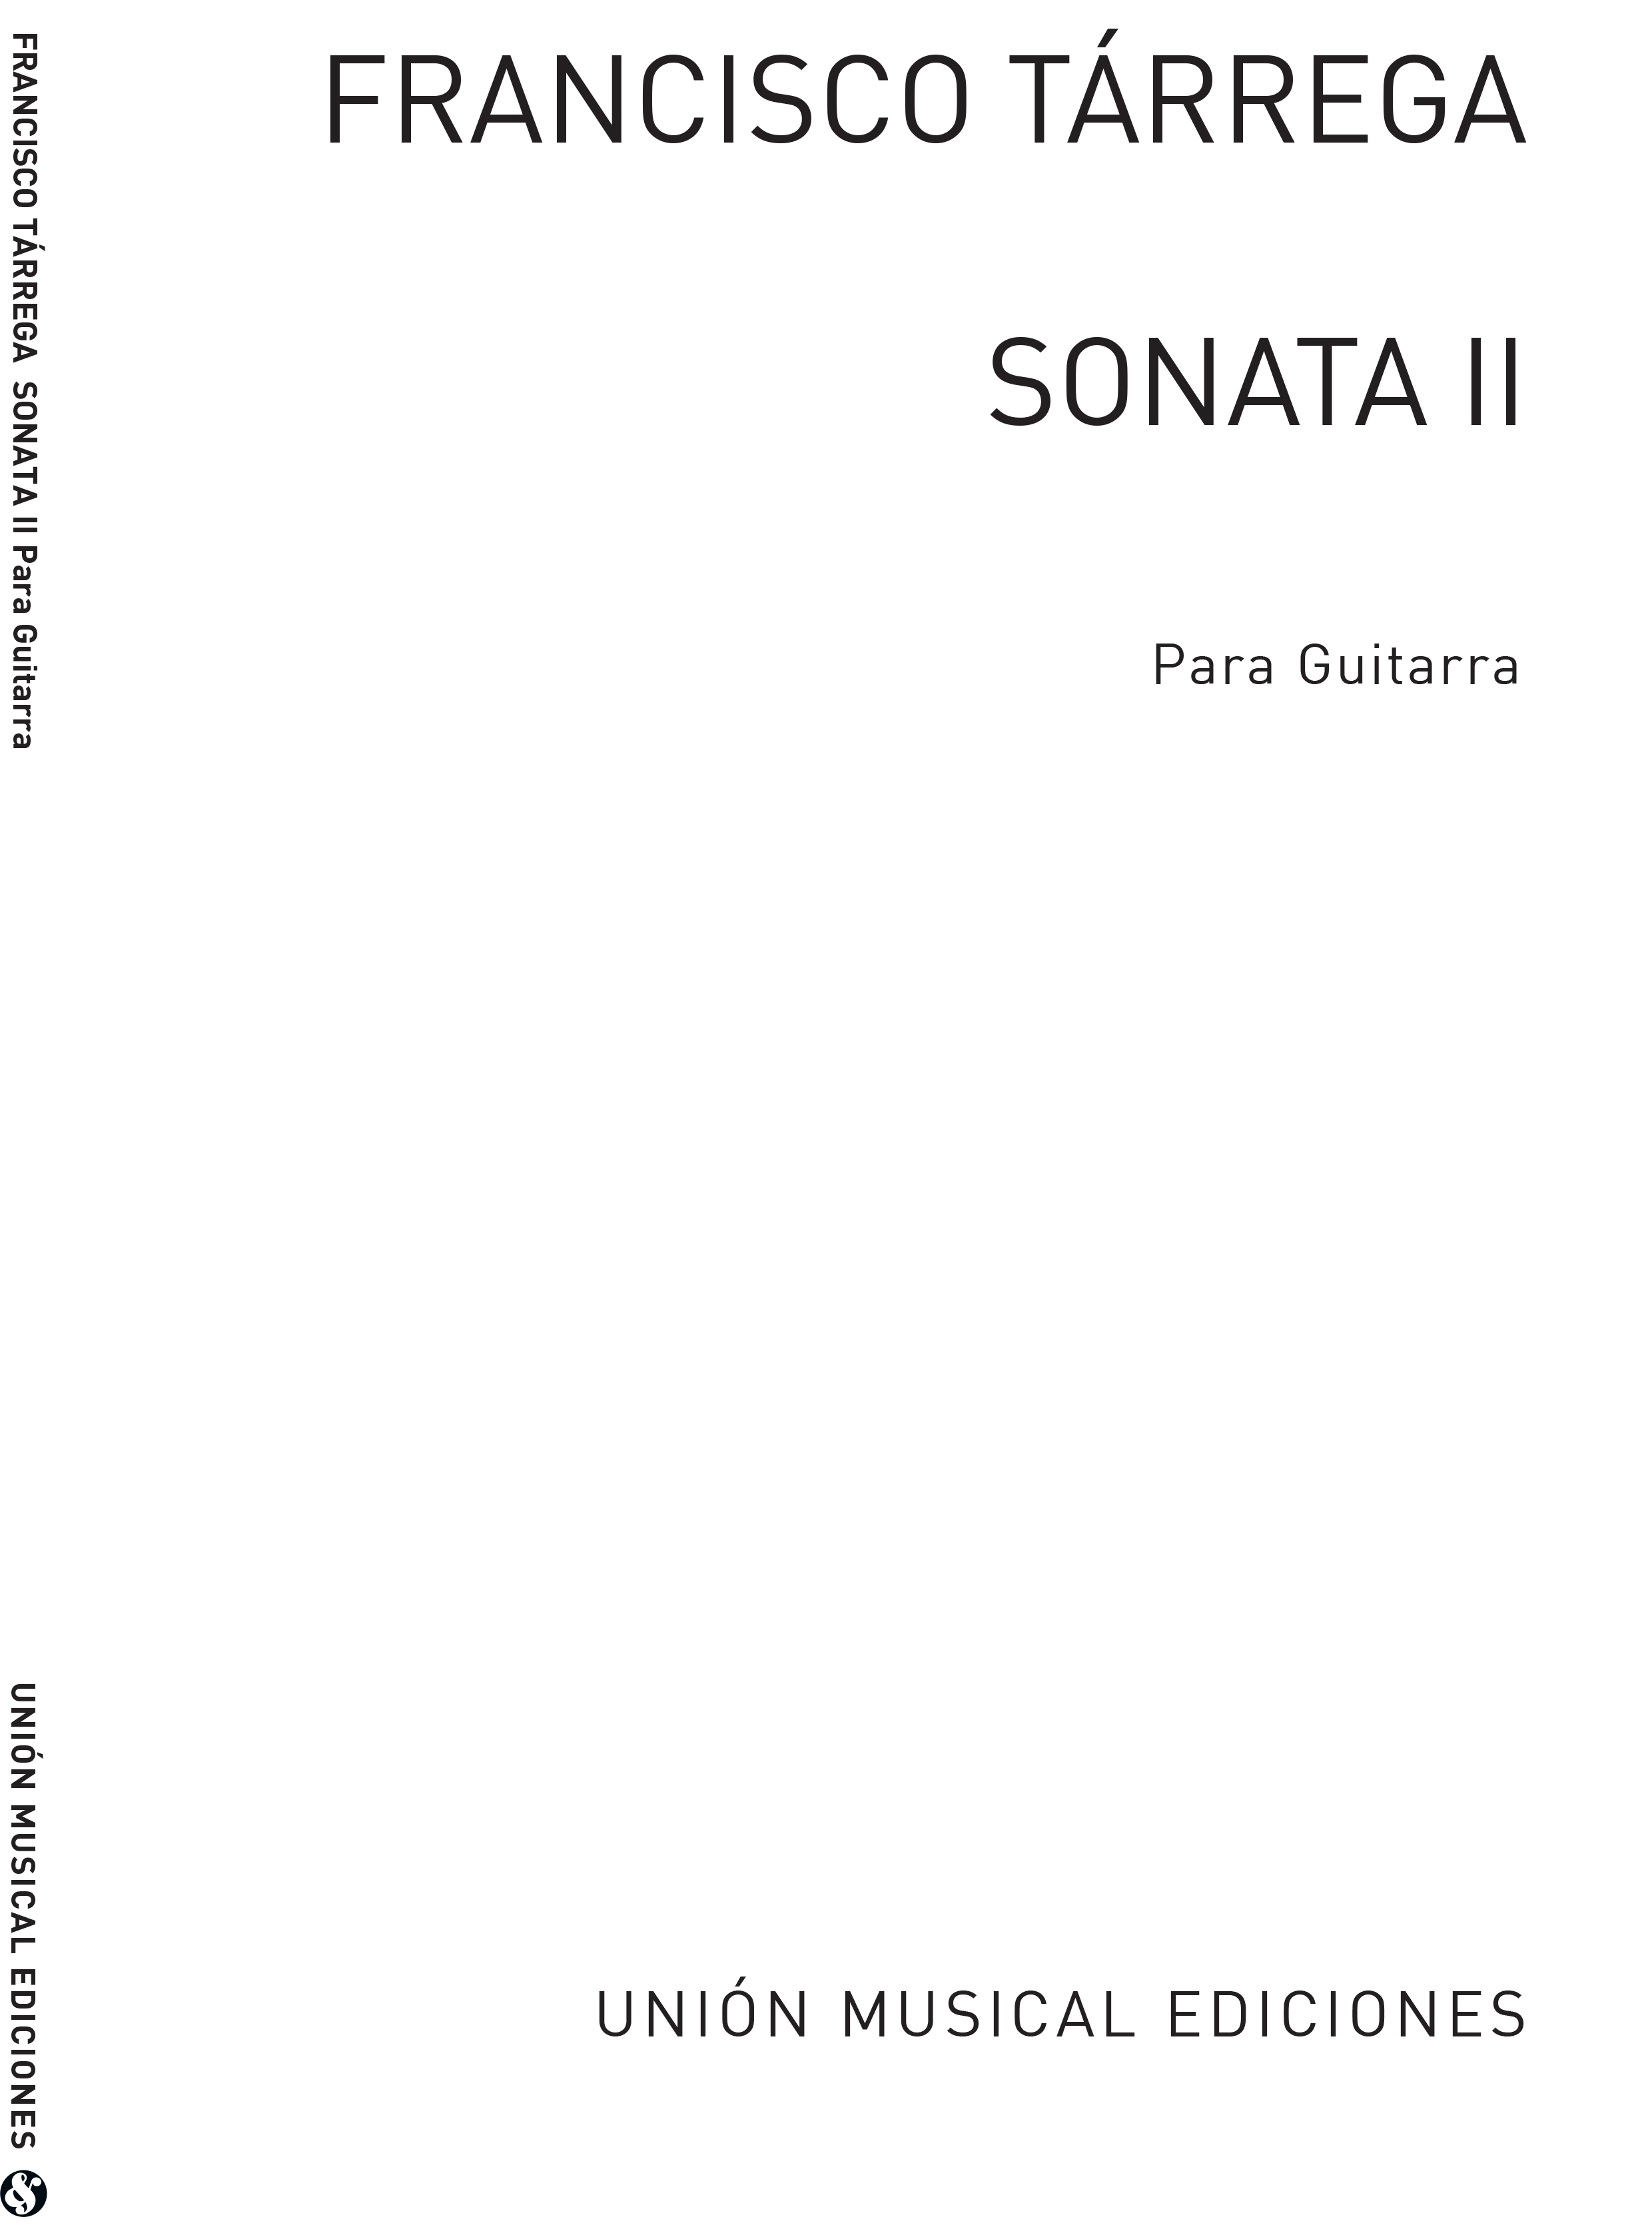 J.S. Bach: Sonata Segunda (Tarrega) for Guitar